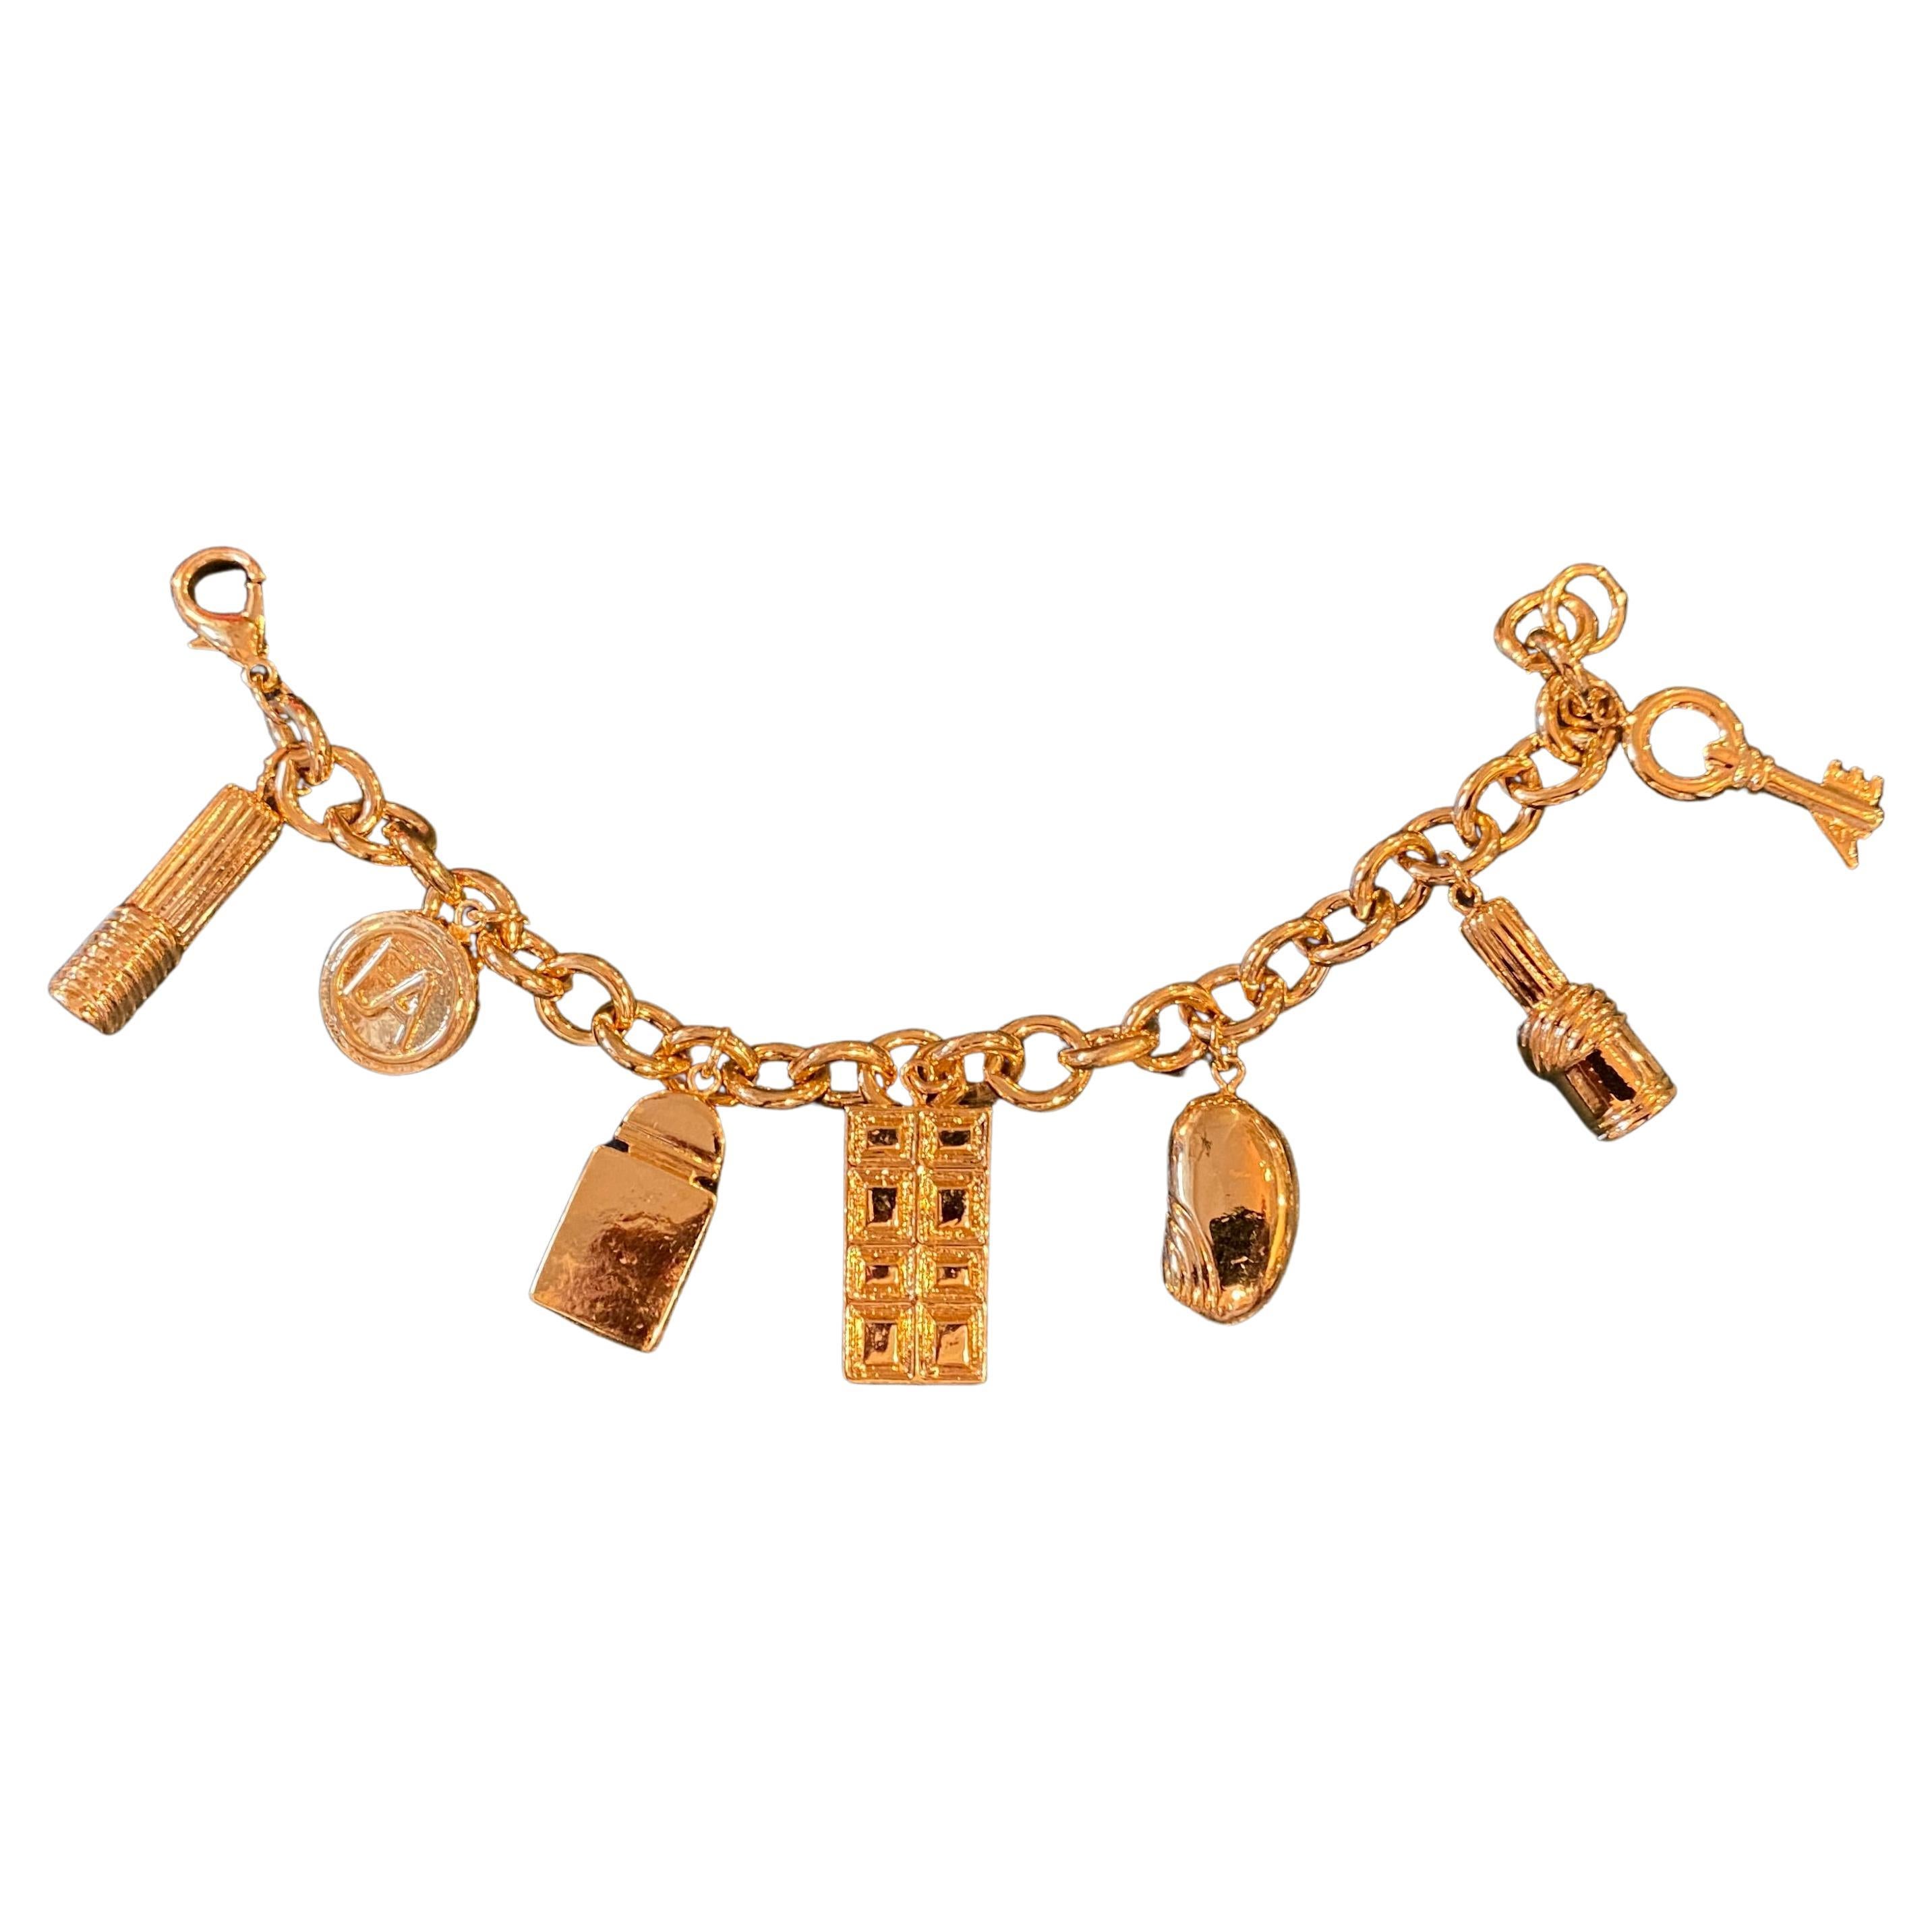 1990s Gold Electroplated Charm Bracelet by Elizabeth Arden